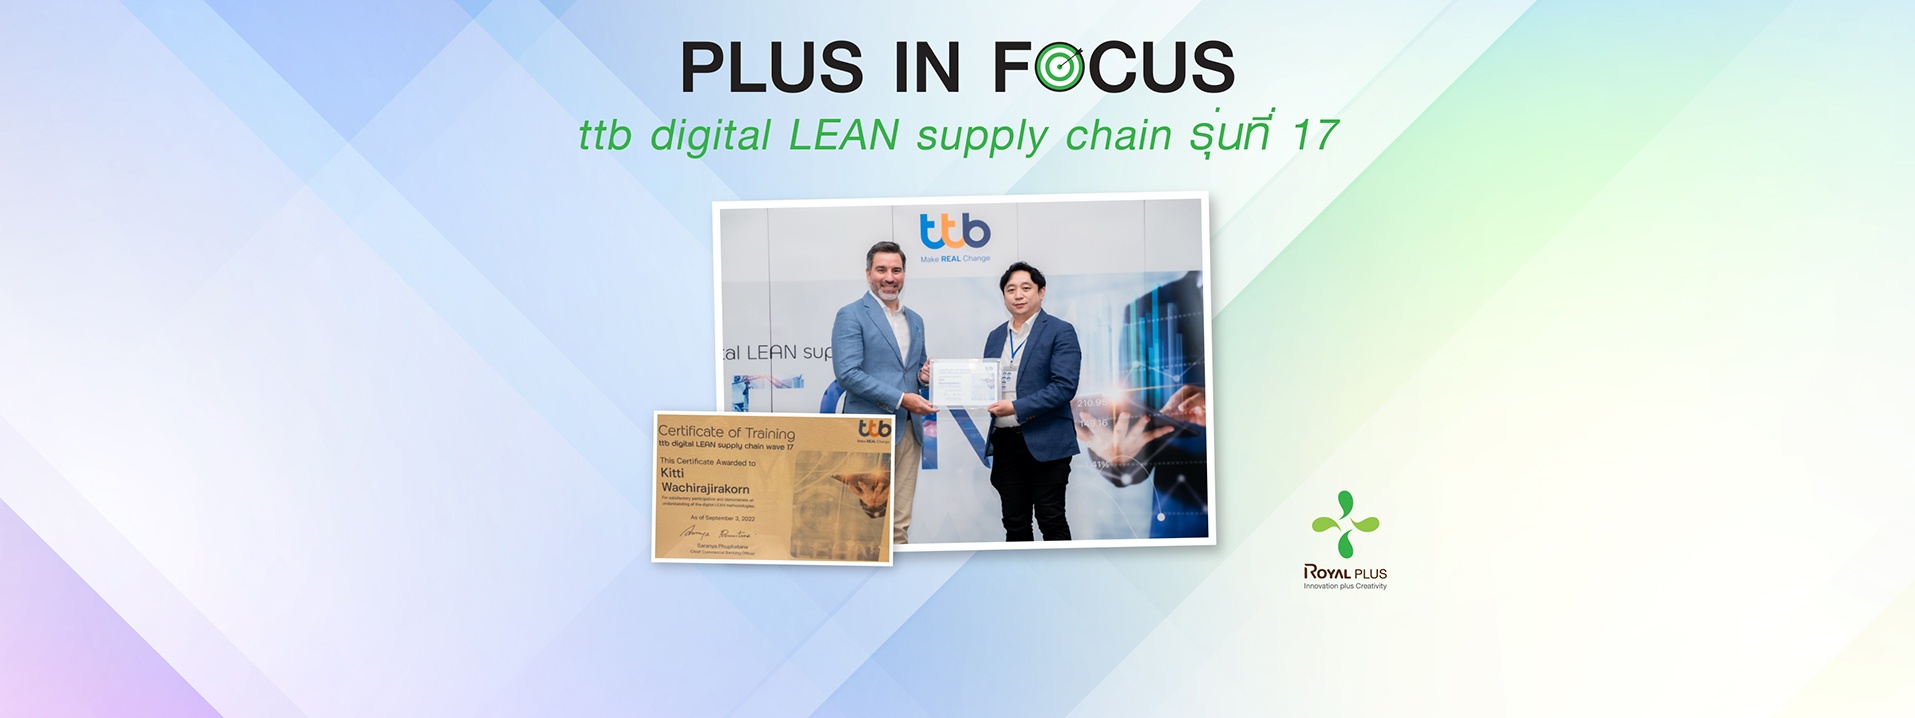 PLUS เข้าร่วมหลักสูตร ttb digital LEAN supply chain” รุ่นที่ 17